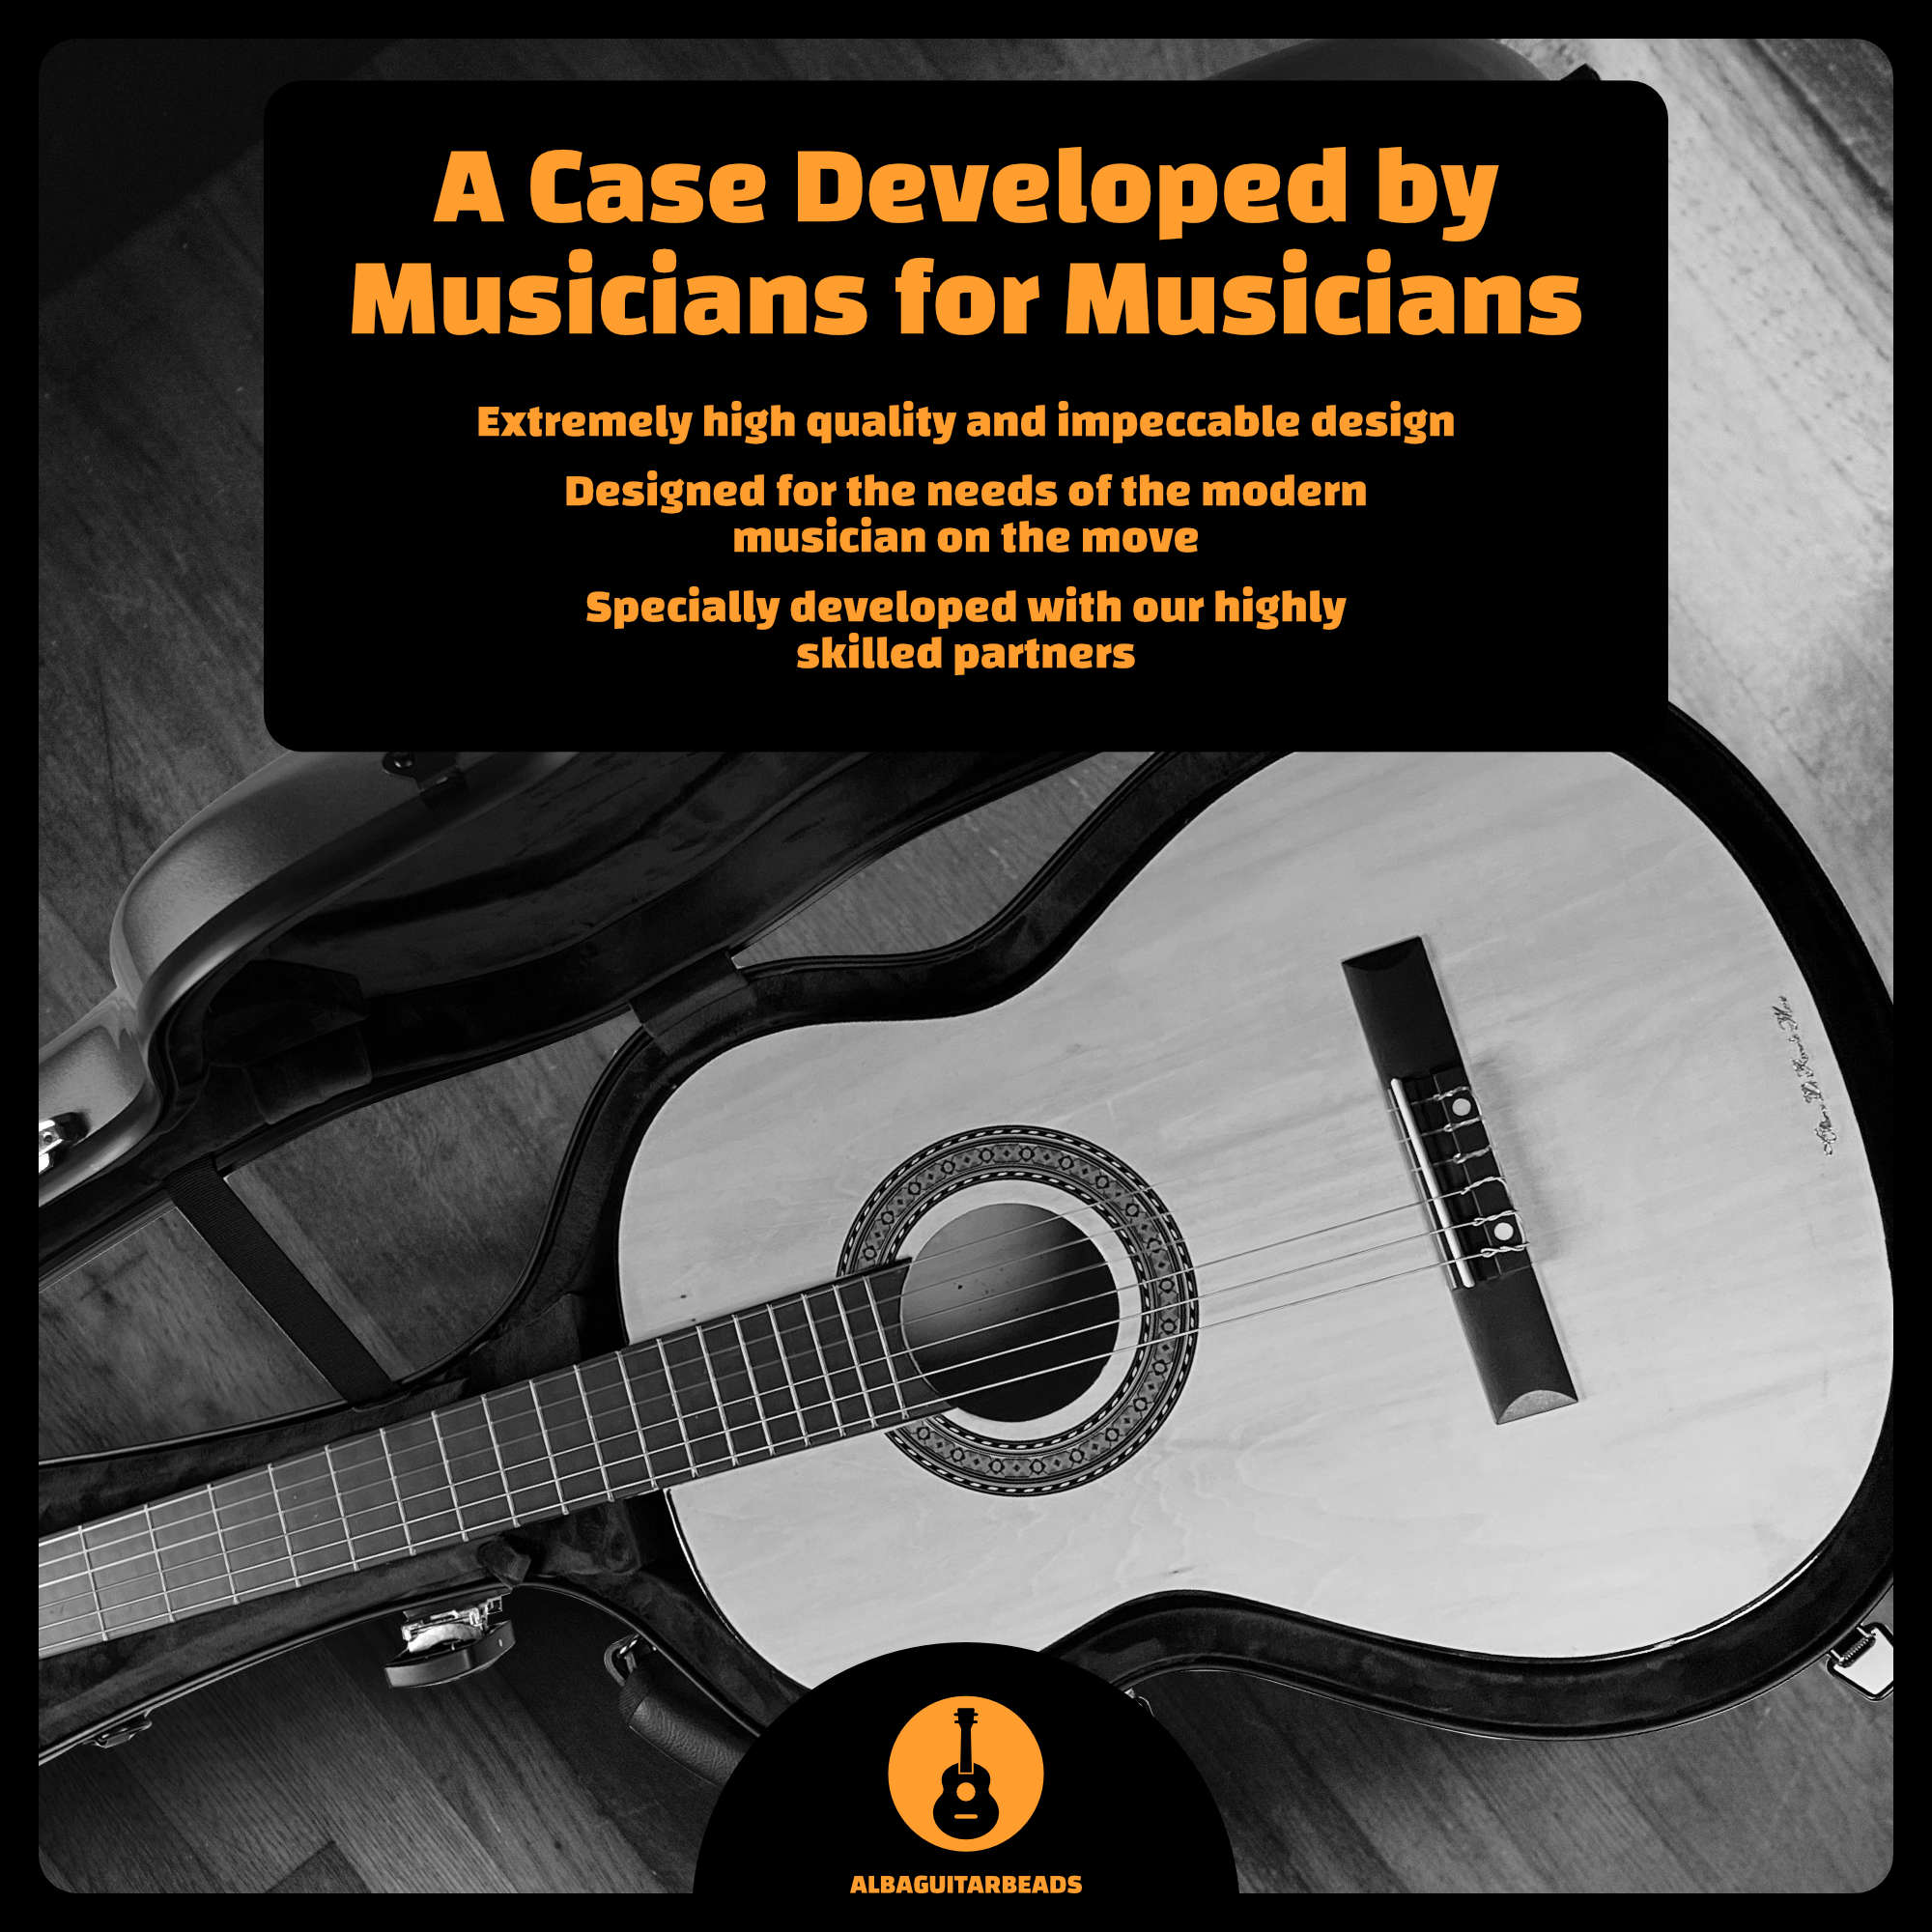 Carbon Alba Guitar Case Red Gloss for Classical Guitar Acoustic, Flamenco guitar case